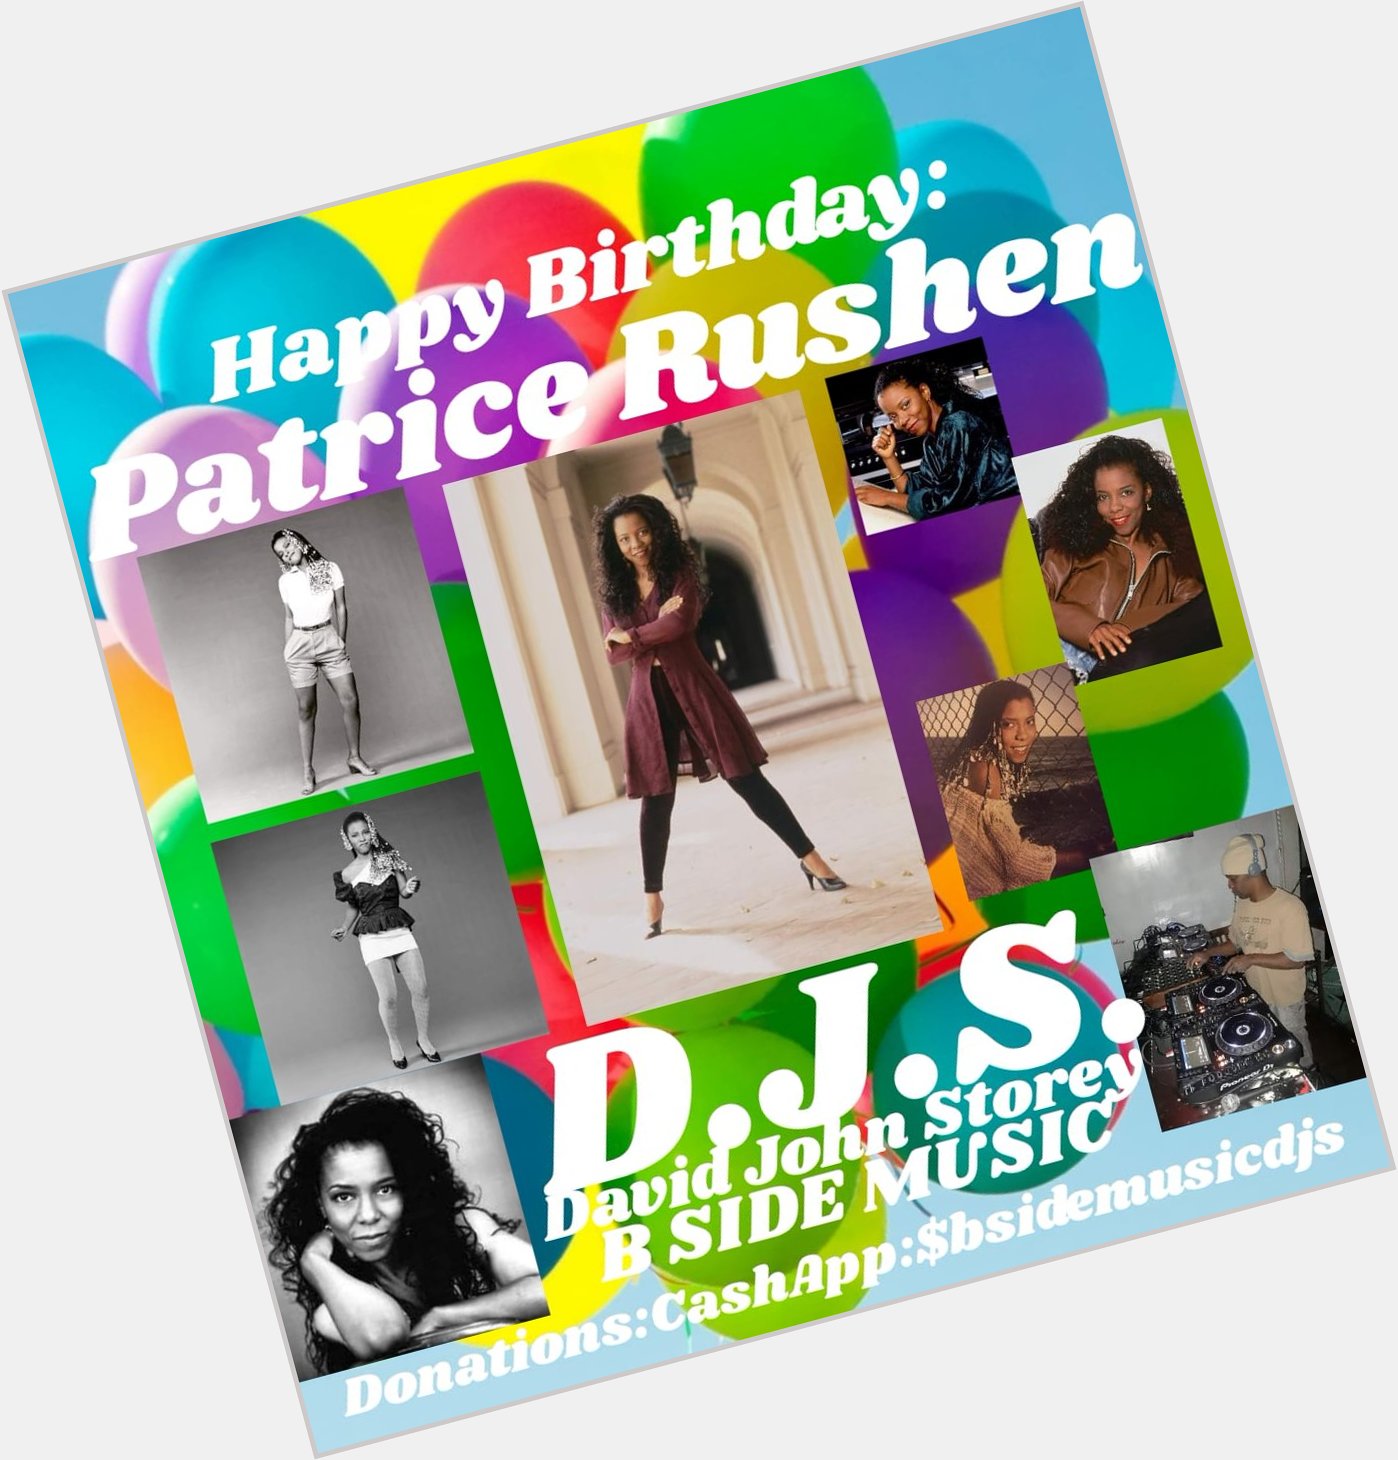 I(D.J.S.) wish singer: \"PATRICE RUSHEN\" Happy Birthday!!! 